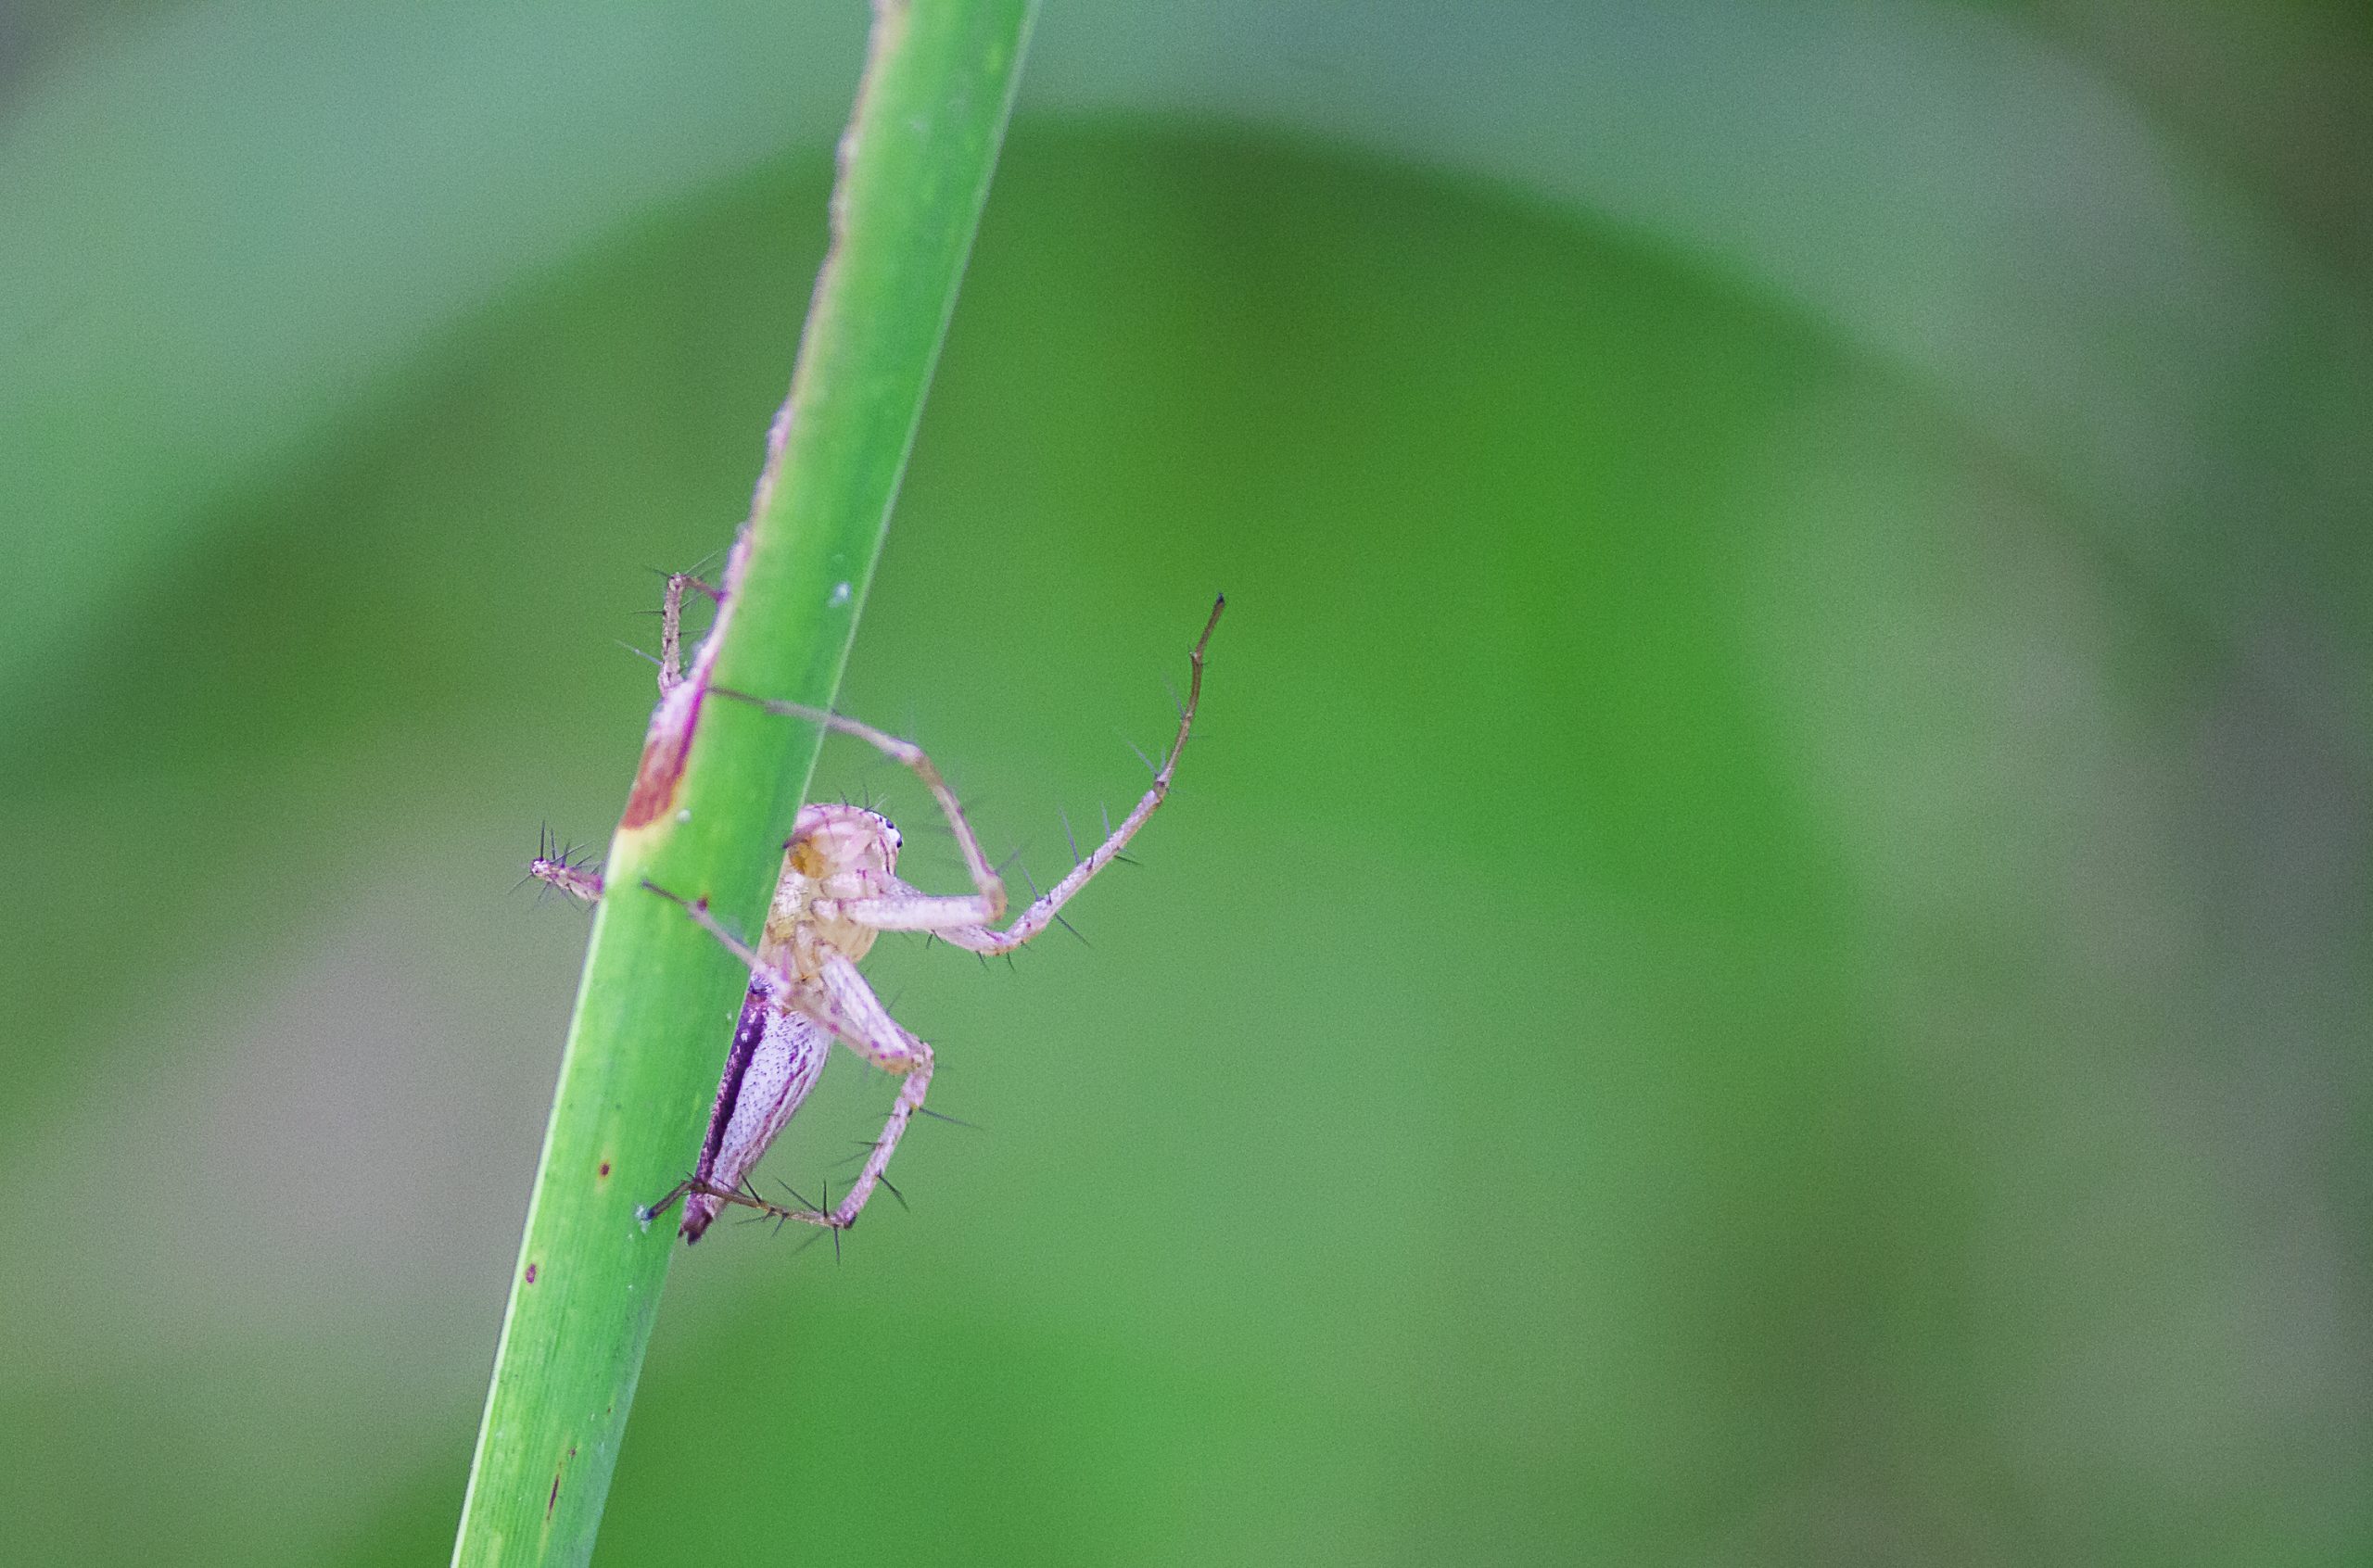 Spider sitting on a Plant Stem